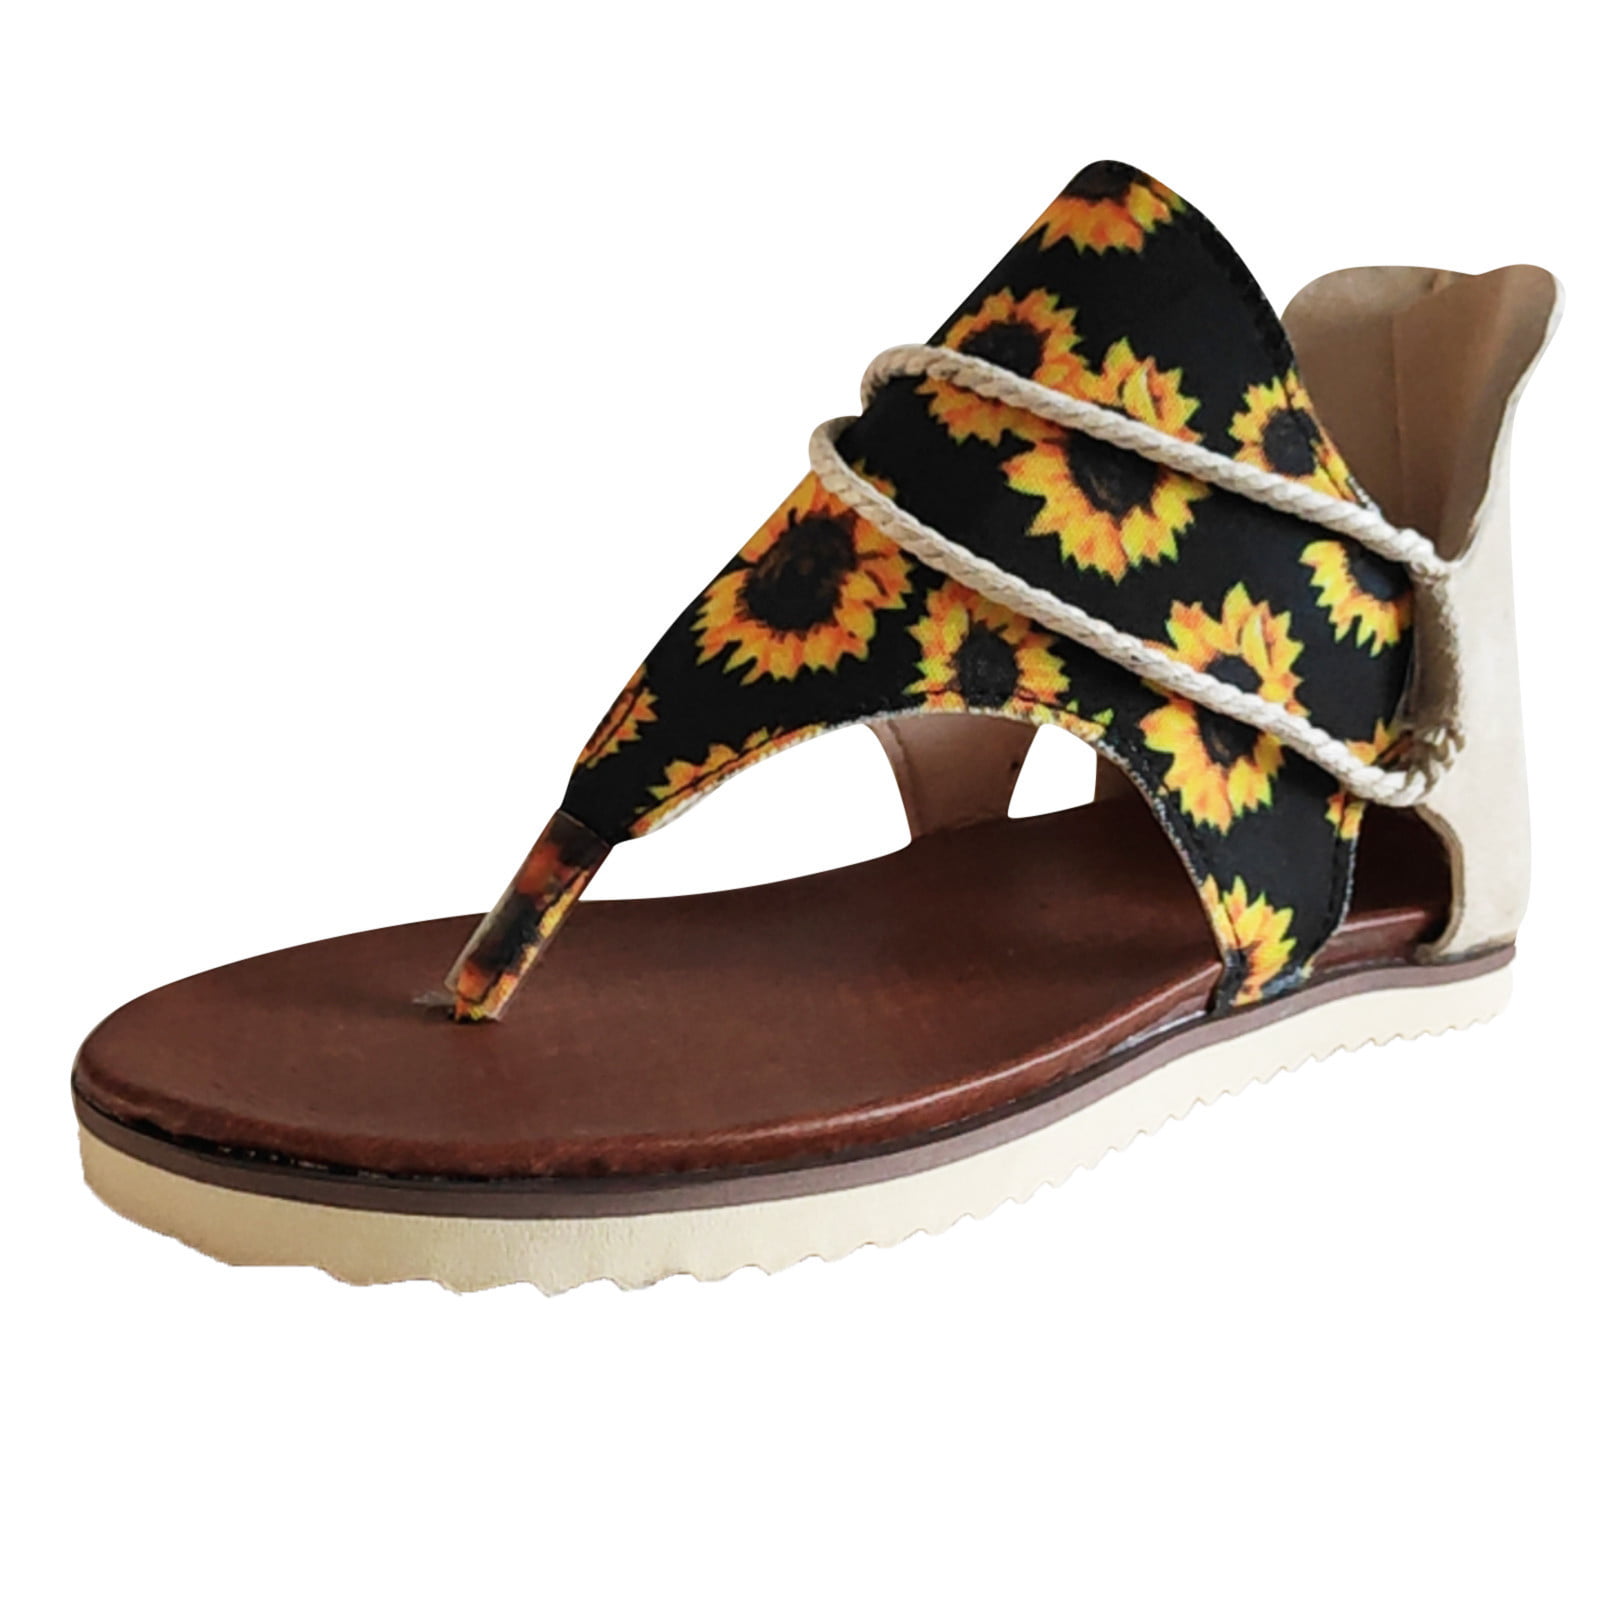 Womens Summer Sunflower Printed Flat Sandals Casual Comfy Travel Beach Sandals Flip Flop Sandals cooki Sandals for Women 